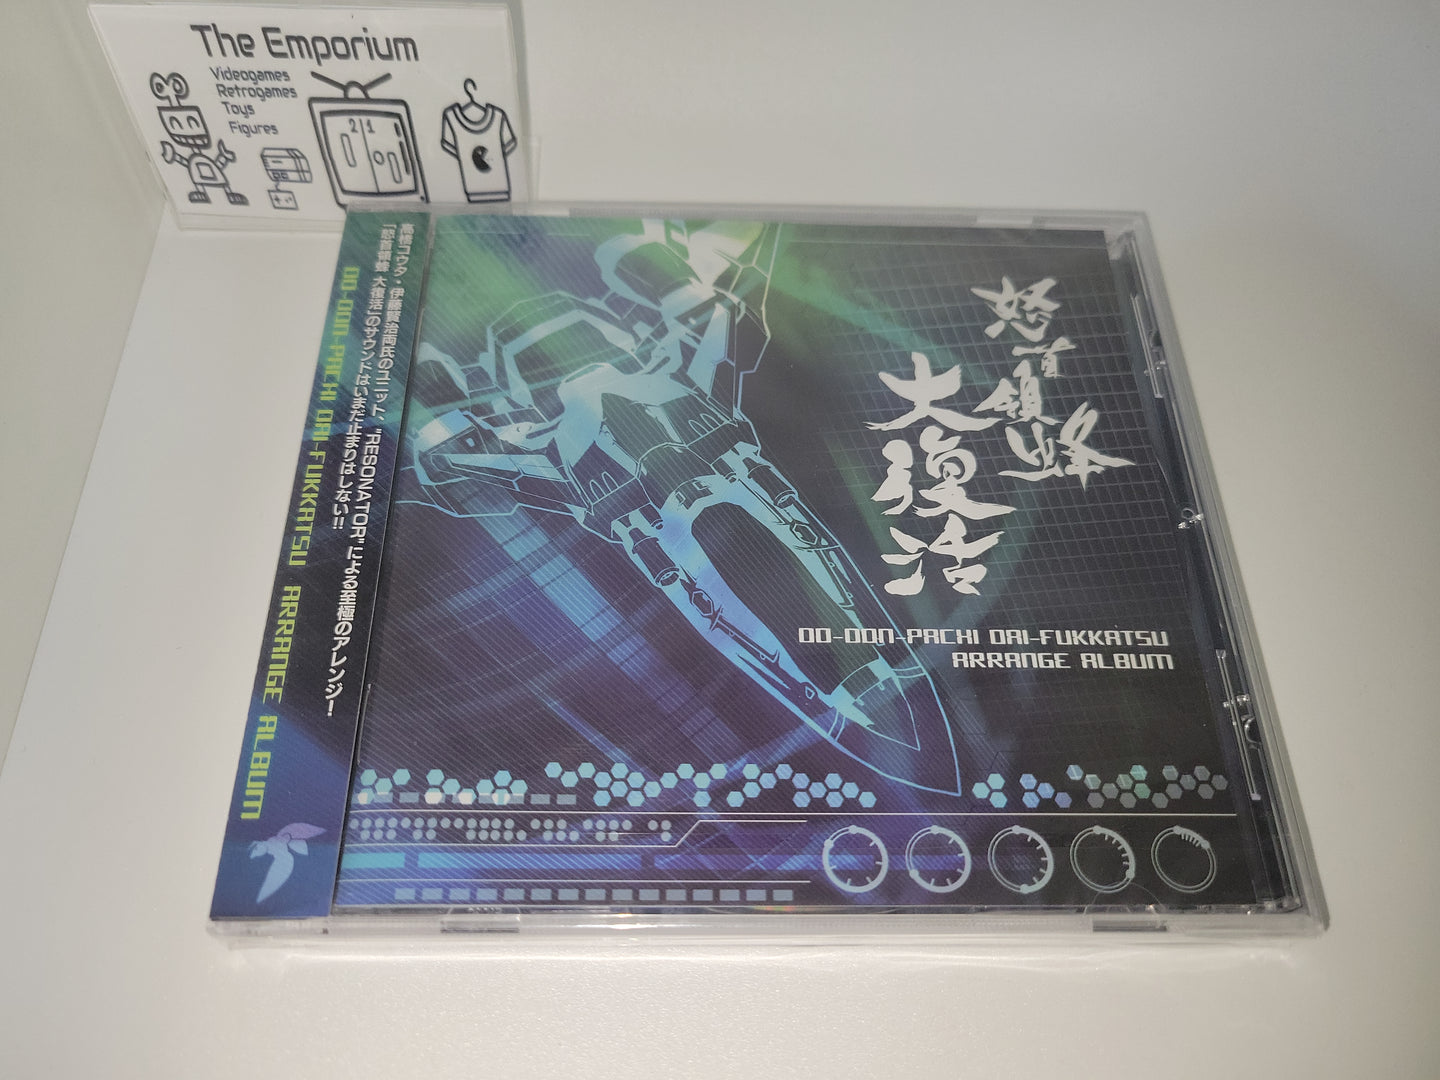 Dodonpachi Daifukkatsu arrange album - Music cd soundtrack